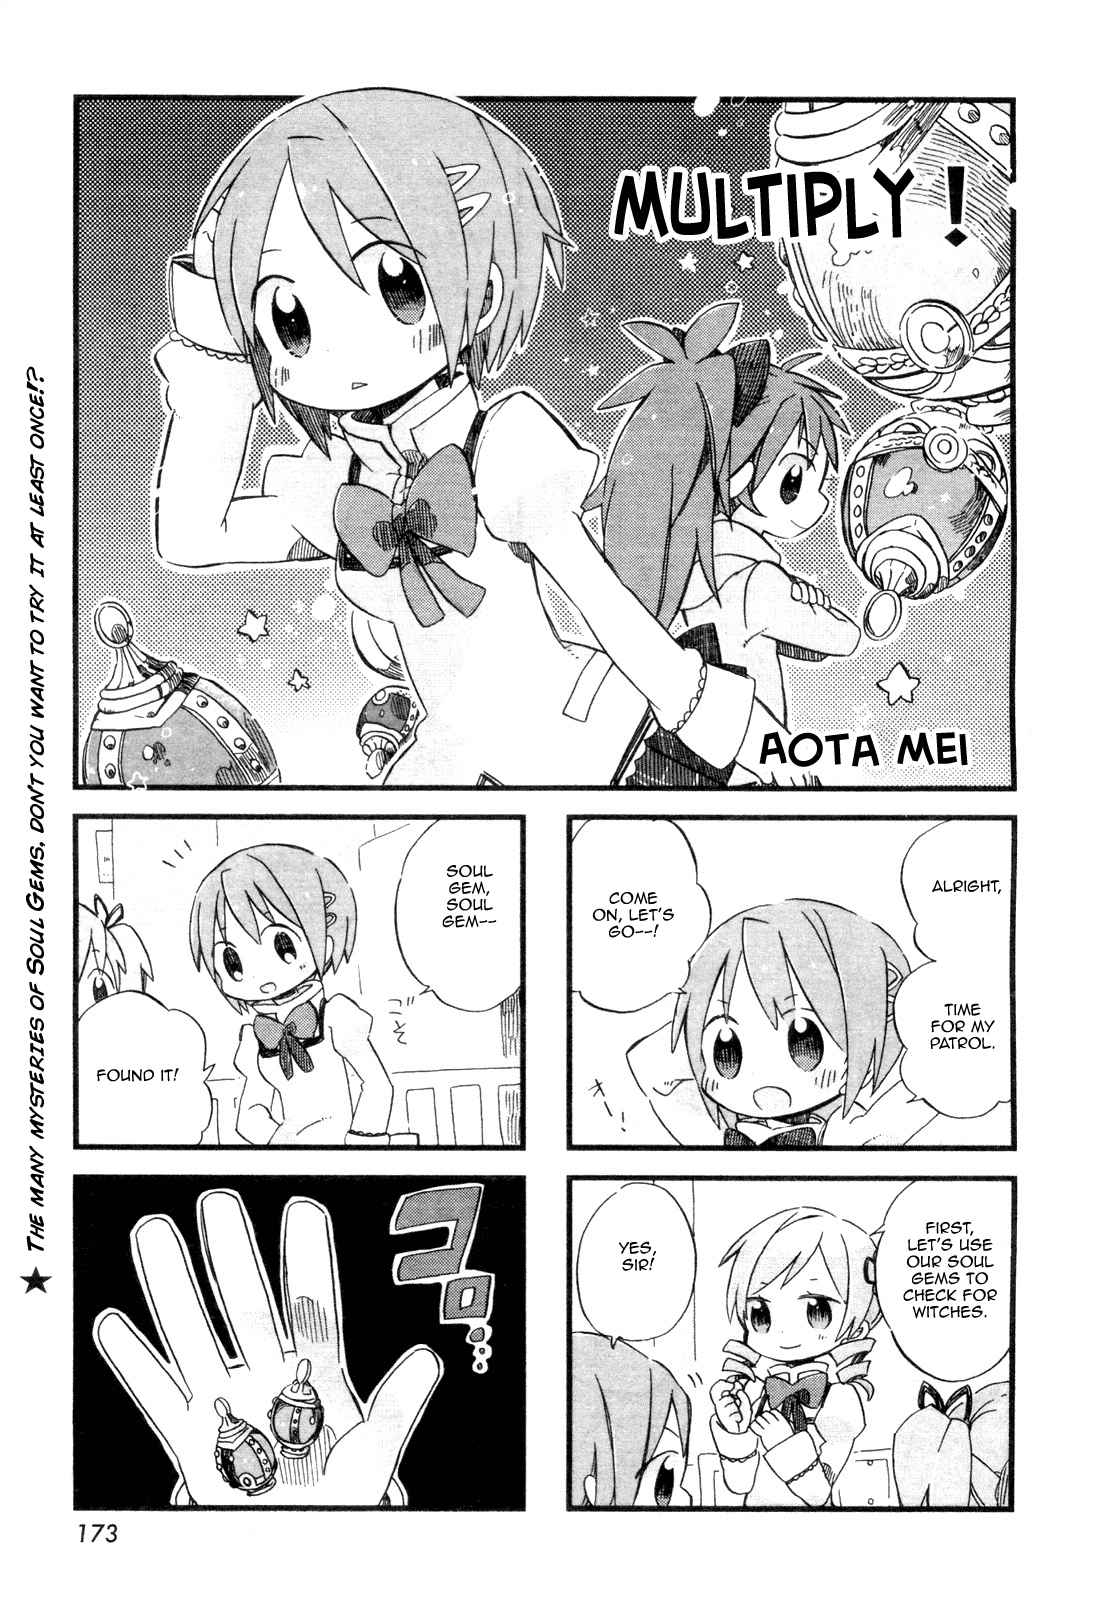 Manga Time Kirara Magica Vol. 3 Ch. 42 Multiply!